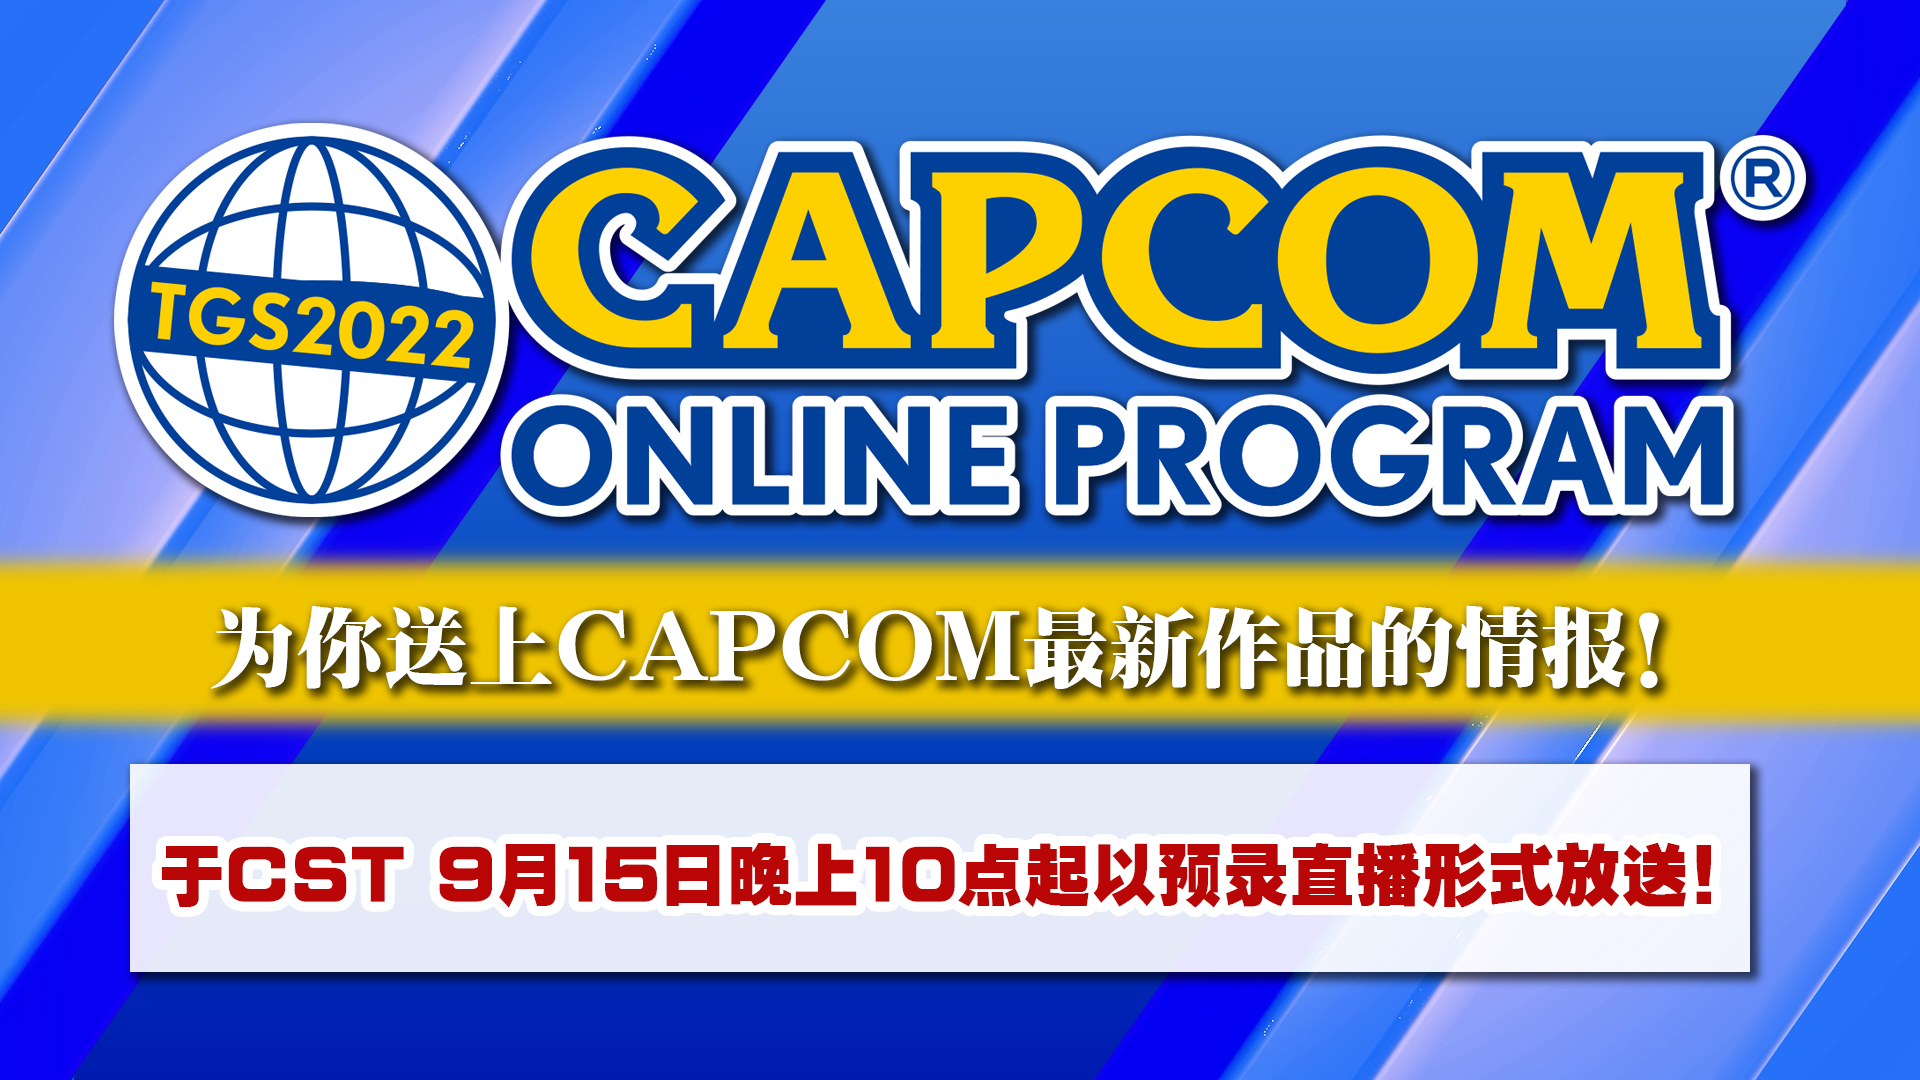 TGS2022 Capcom Online Program